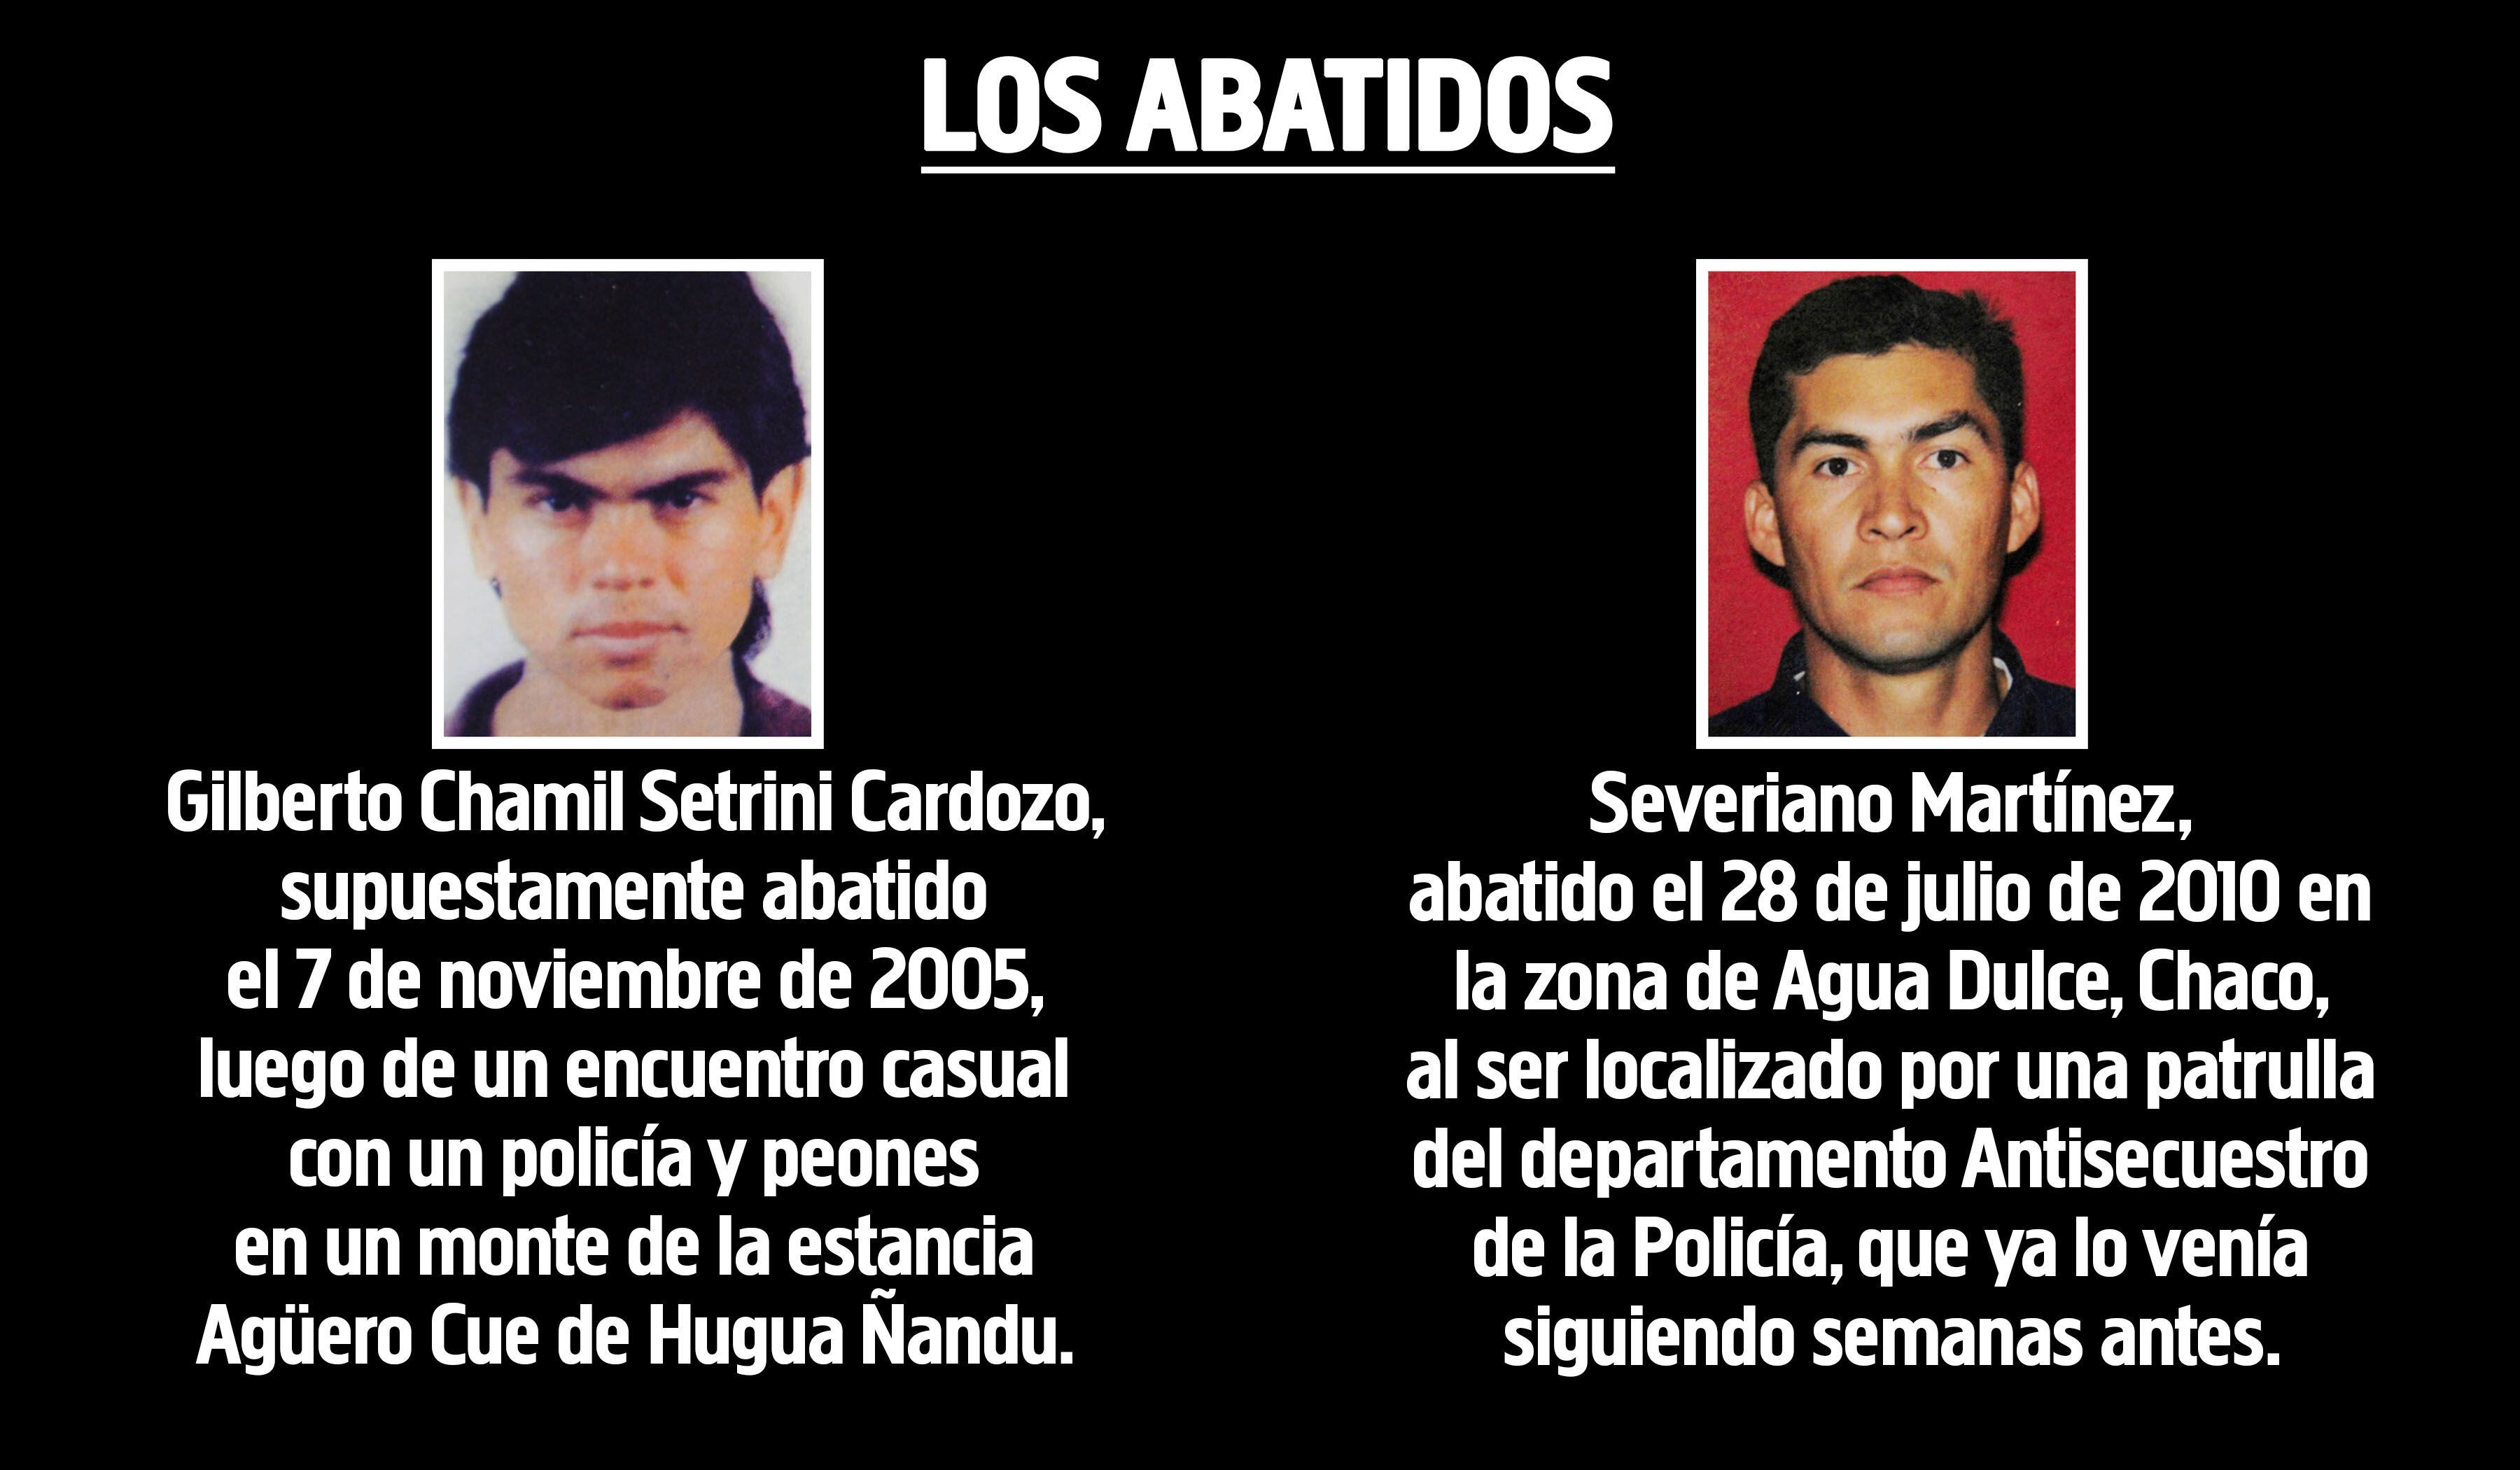 Gilberto Chamil Setrini Cardozo y Severiano Martínez, abatidos.